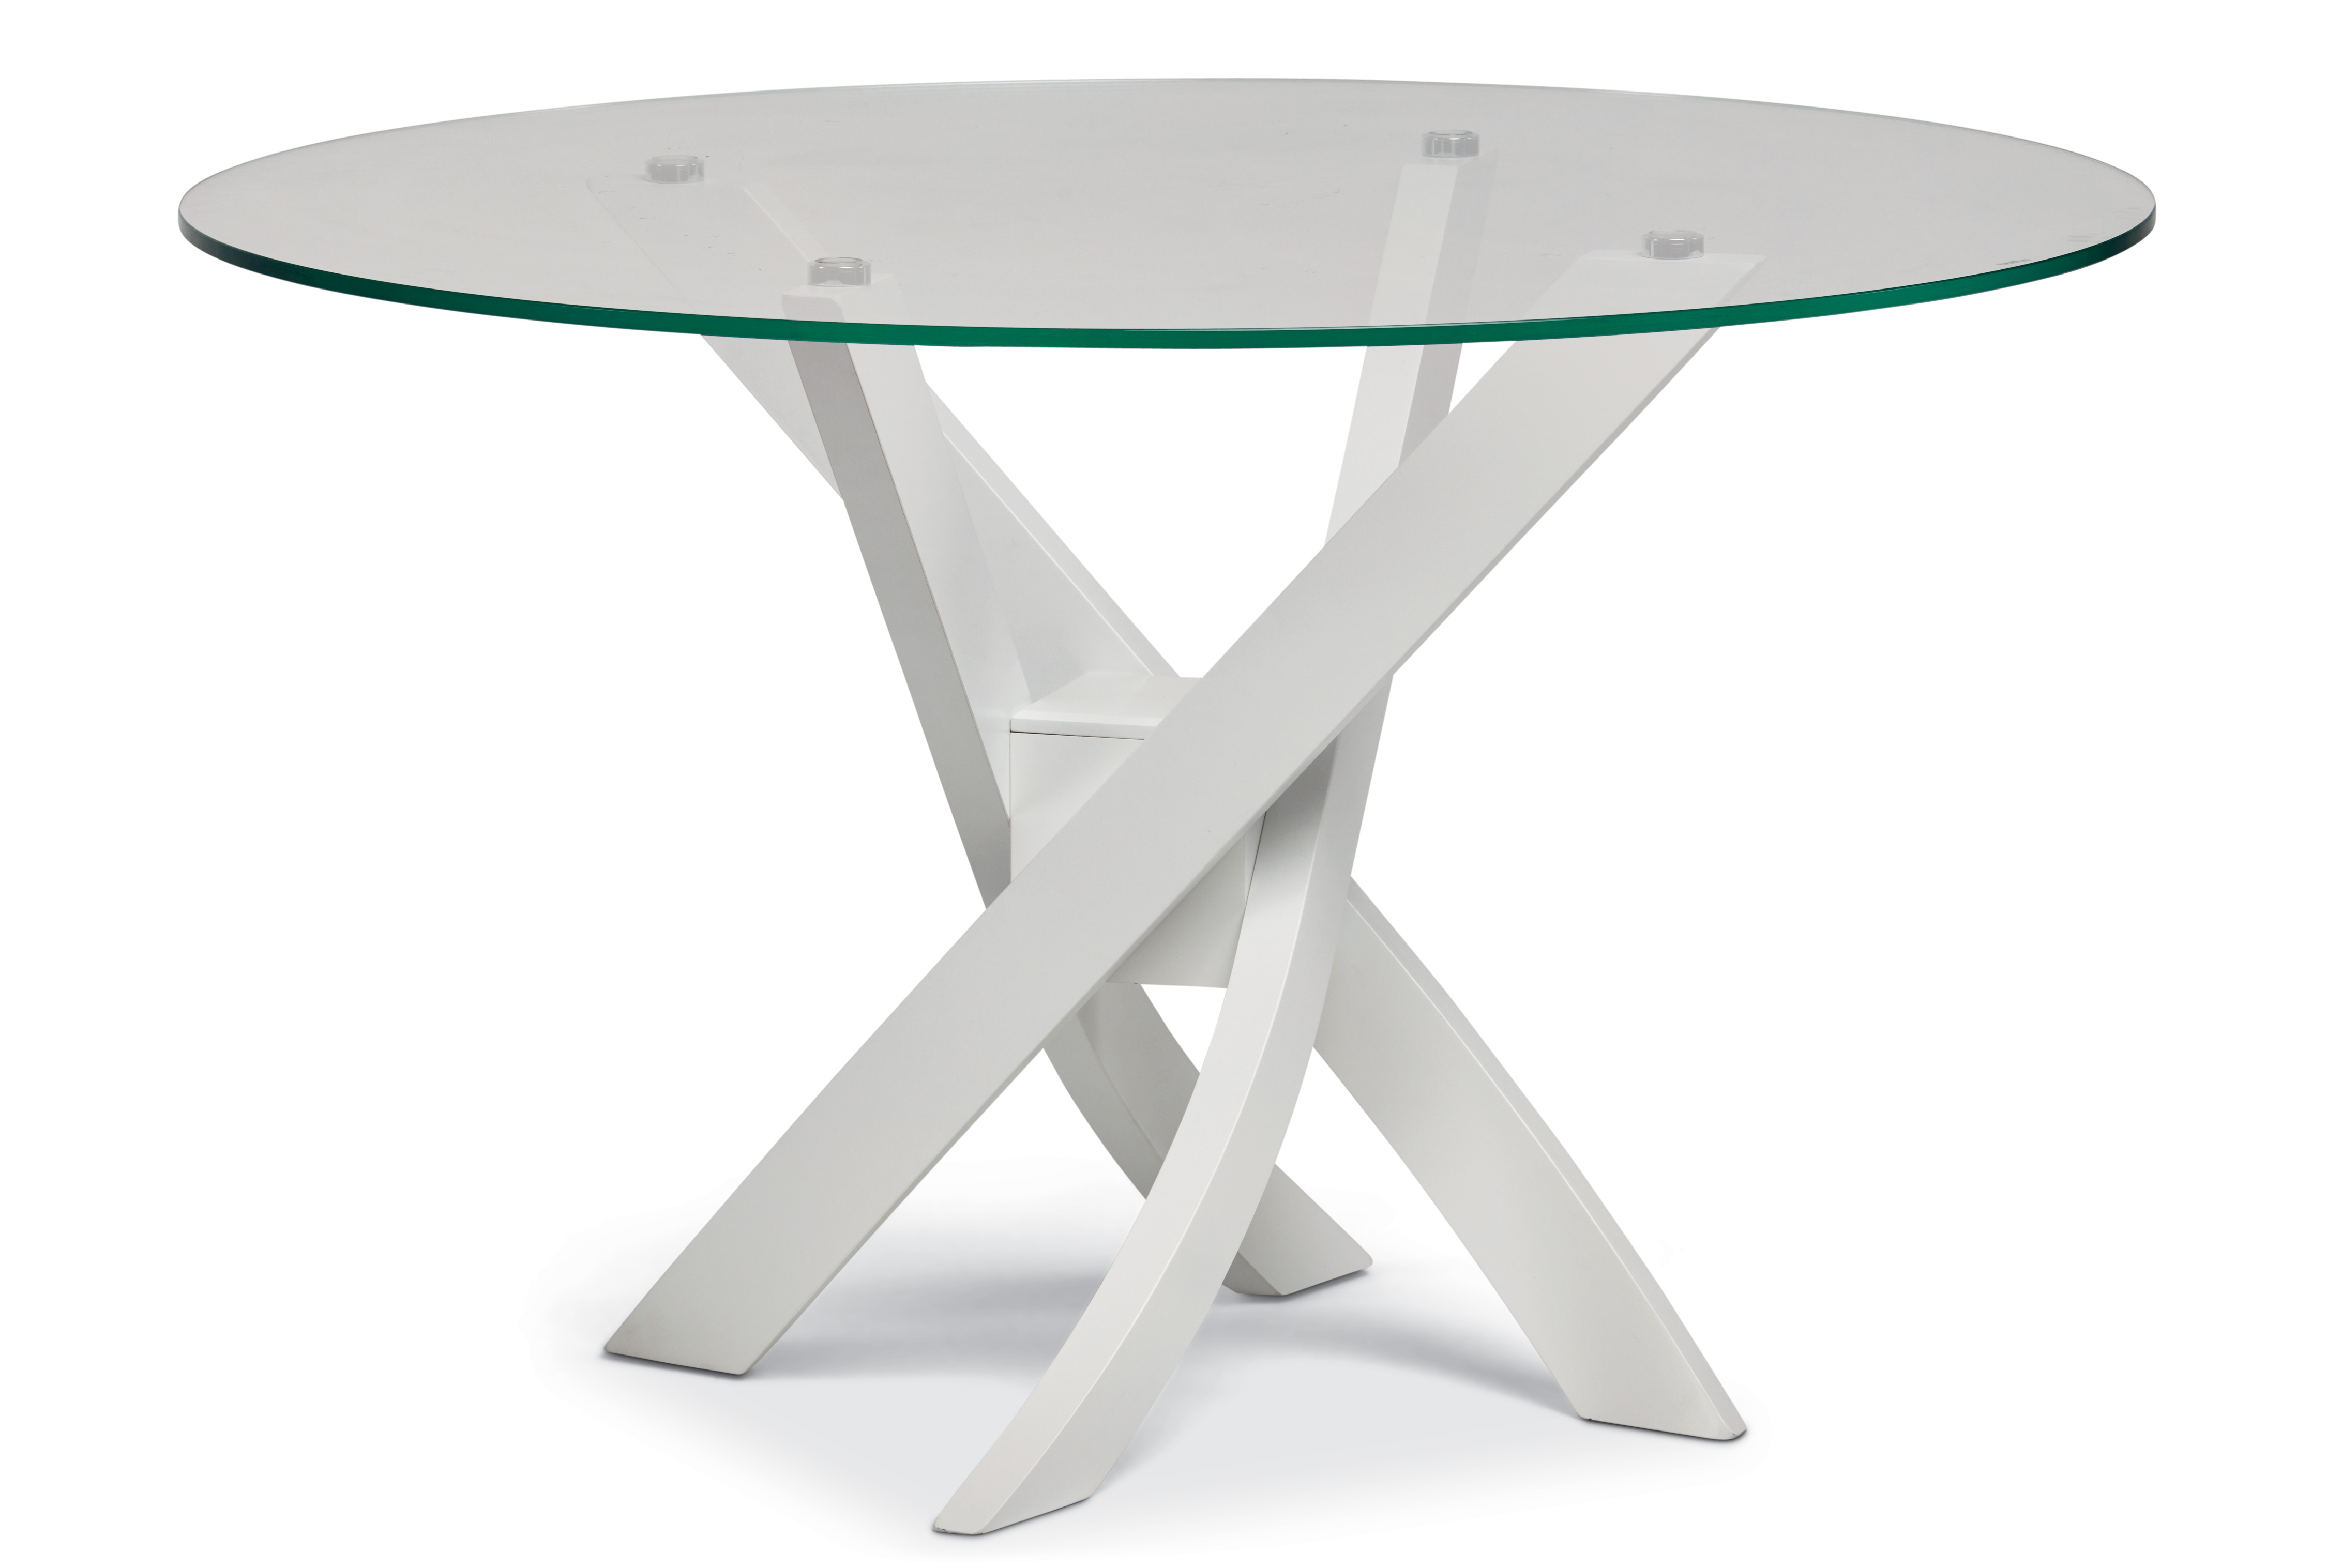 Markham Pedestal Table Base : dining room : dining tables : bermex